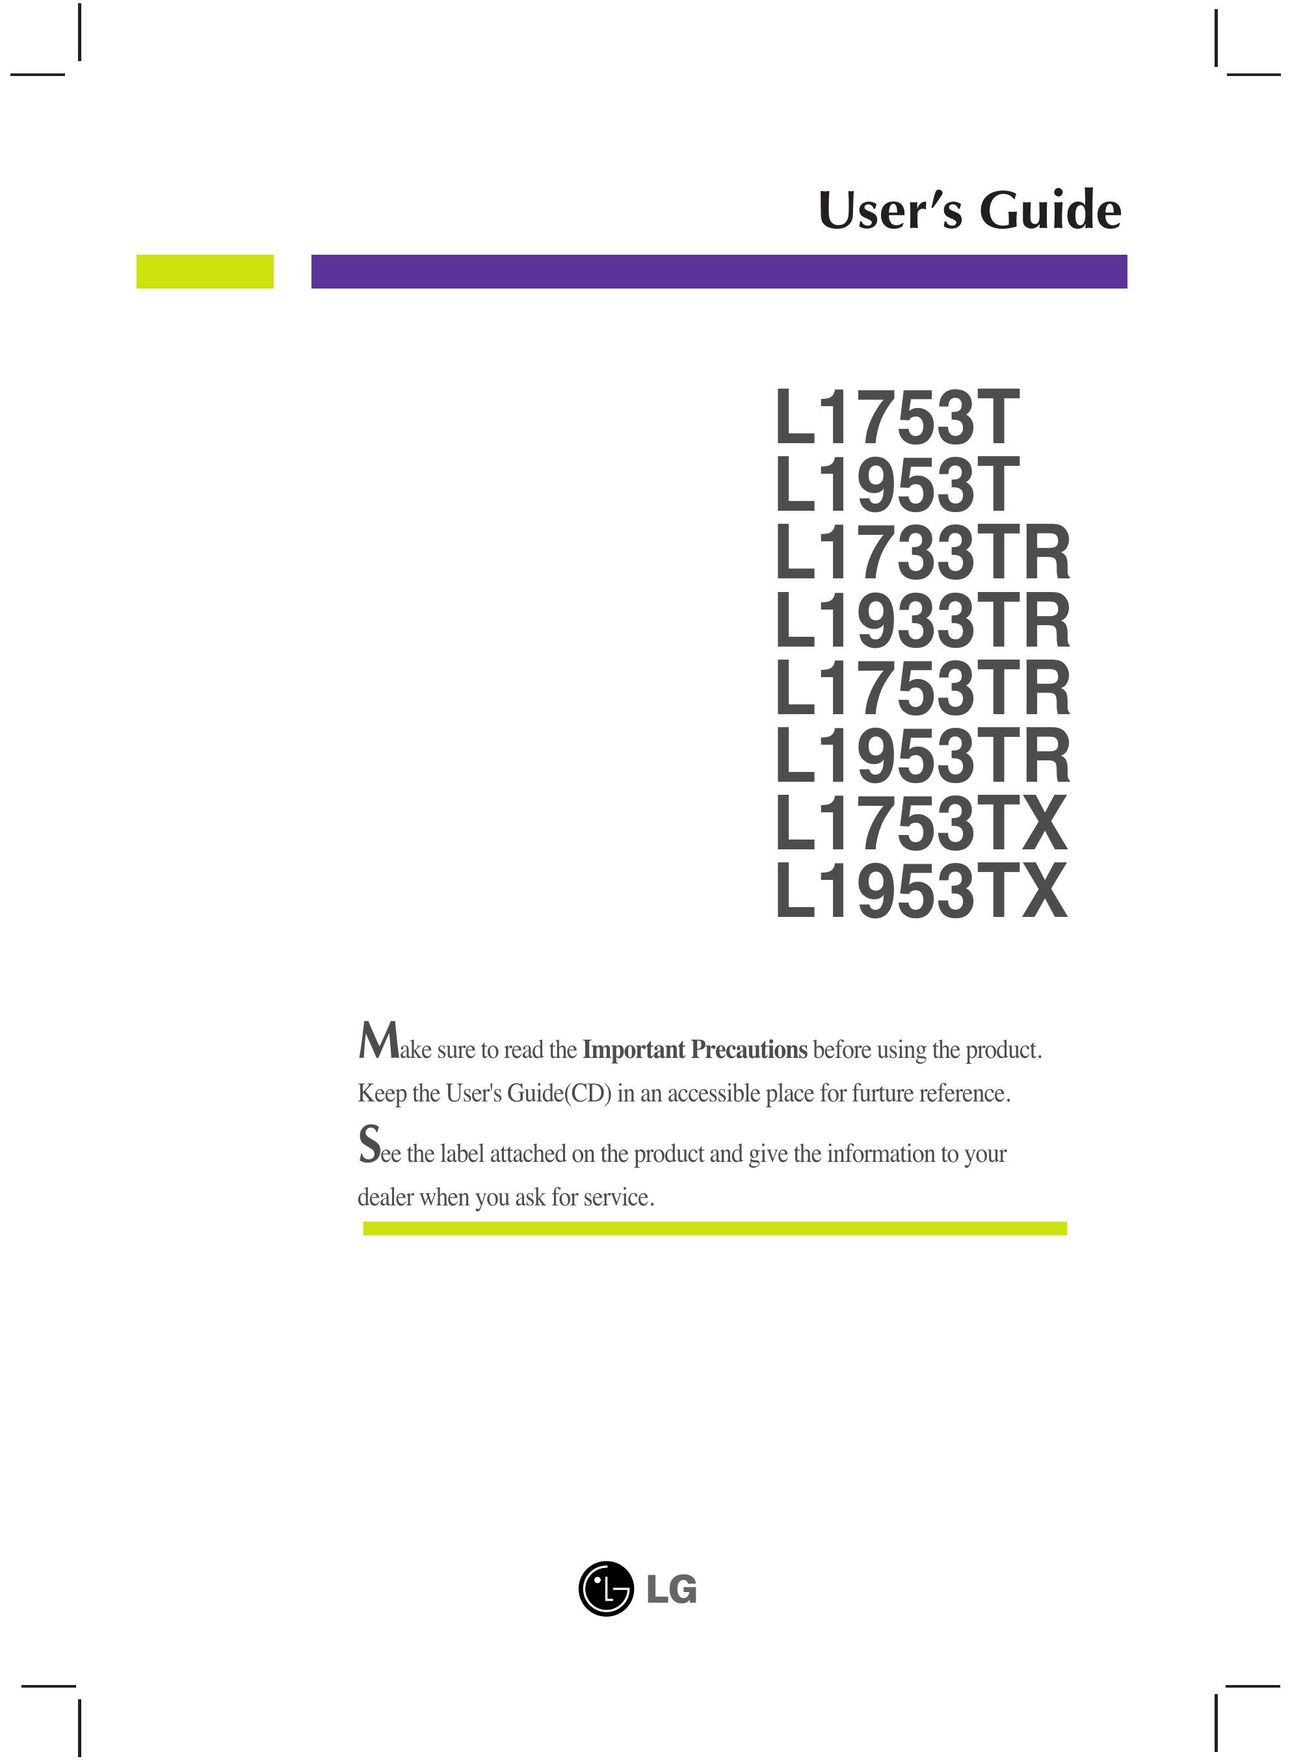 LG Electronics L1953TX CD Player User Manual